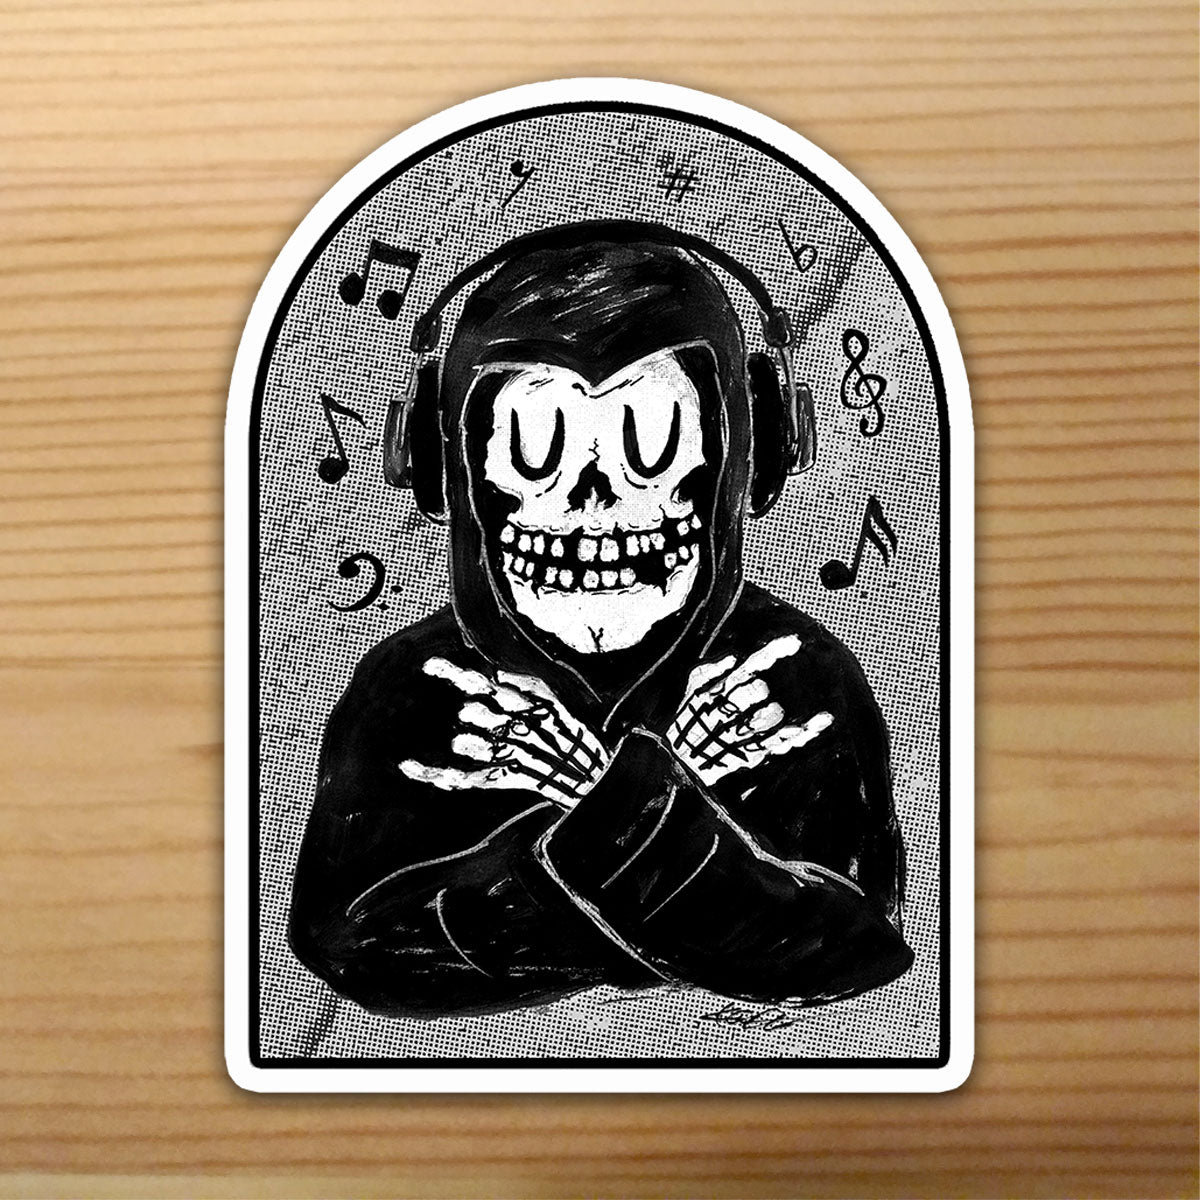 Musical Misfit! Glossy Vinyl Sticker